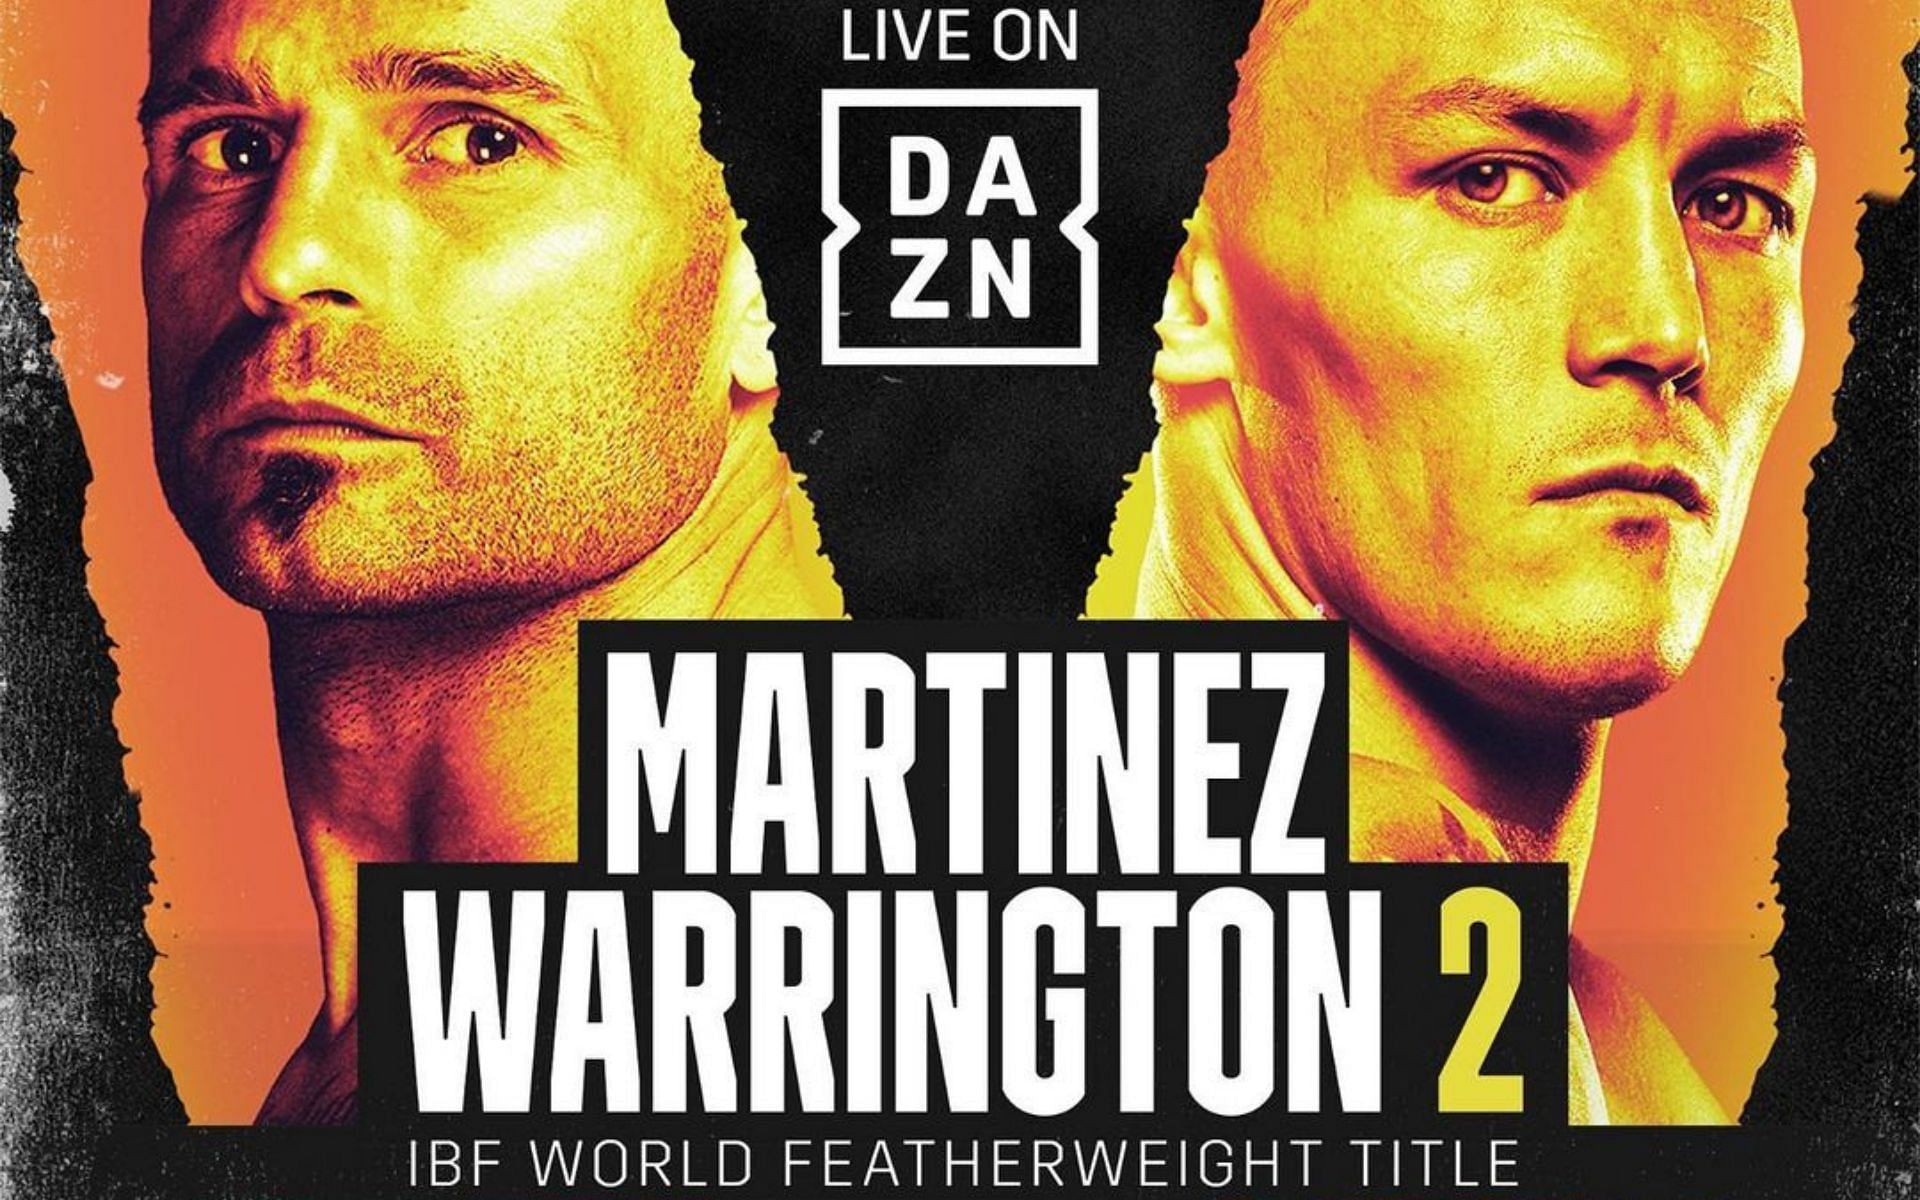  Kiko Martinez (left) vs. Josh Warrington (right)poster [Image via @j_warrington on Instagram]